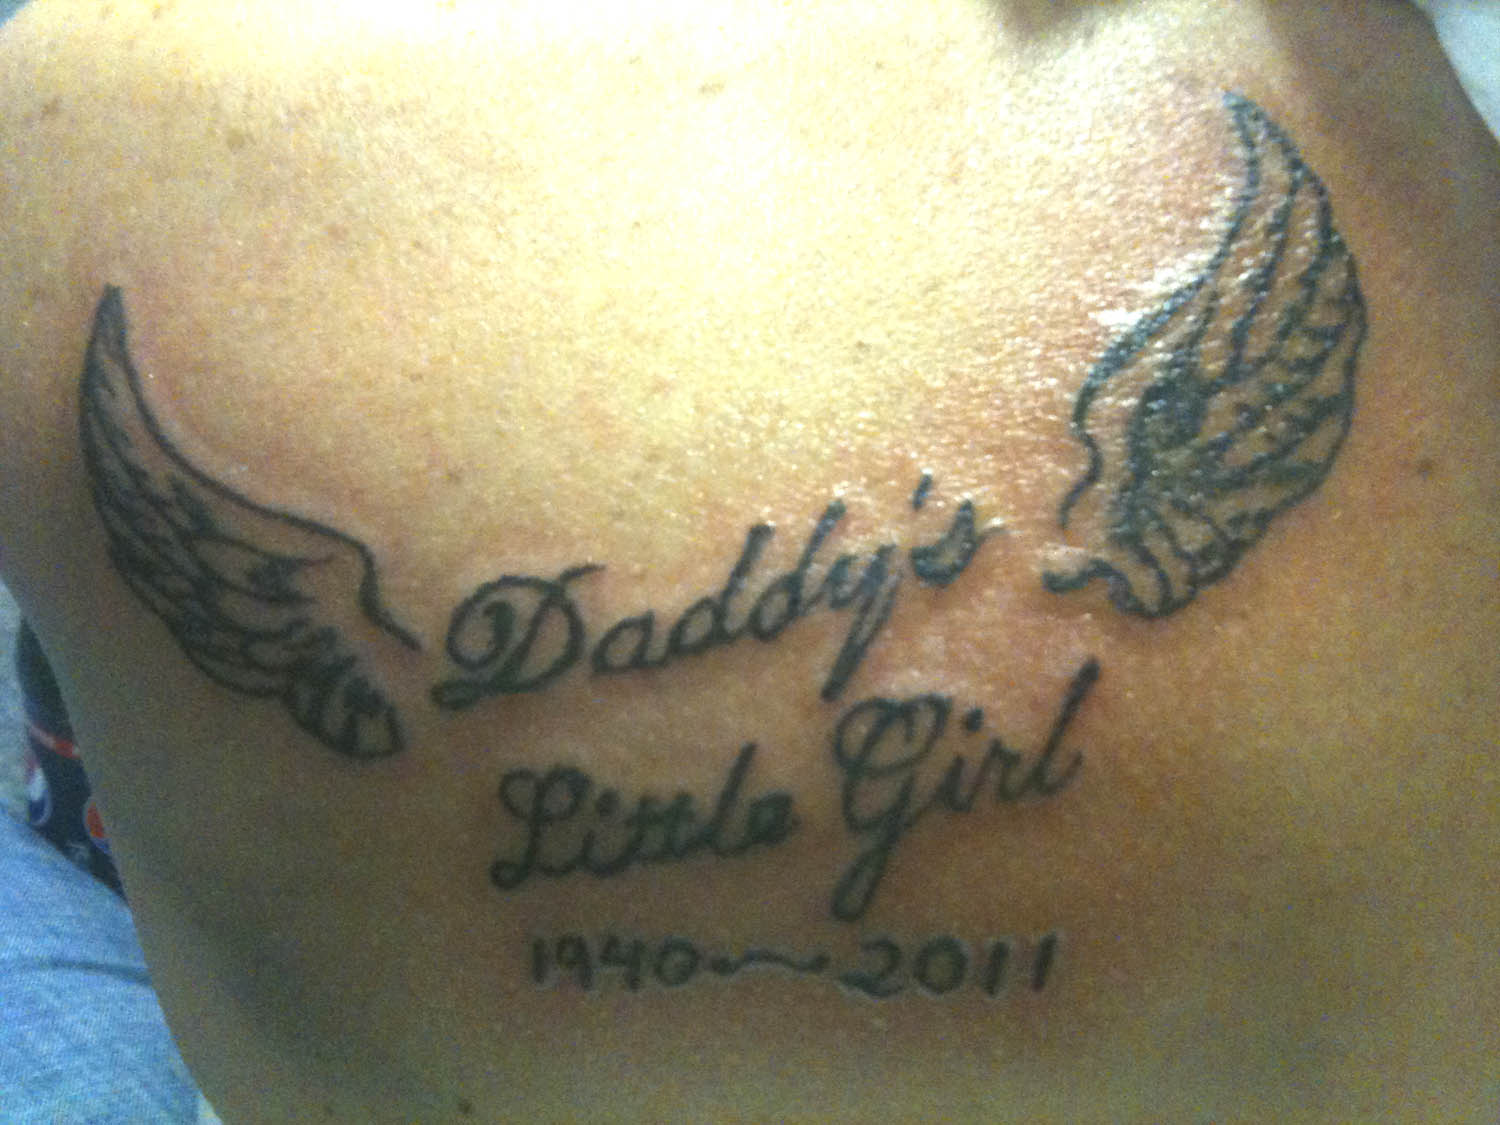 daddy's little girl tattoo by completeartist on DeviantArt